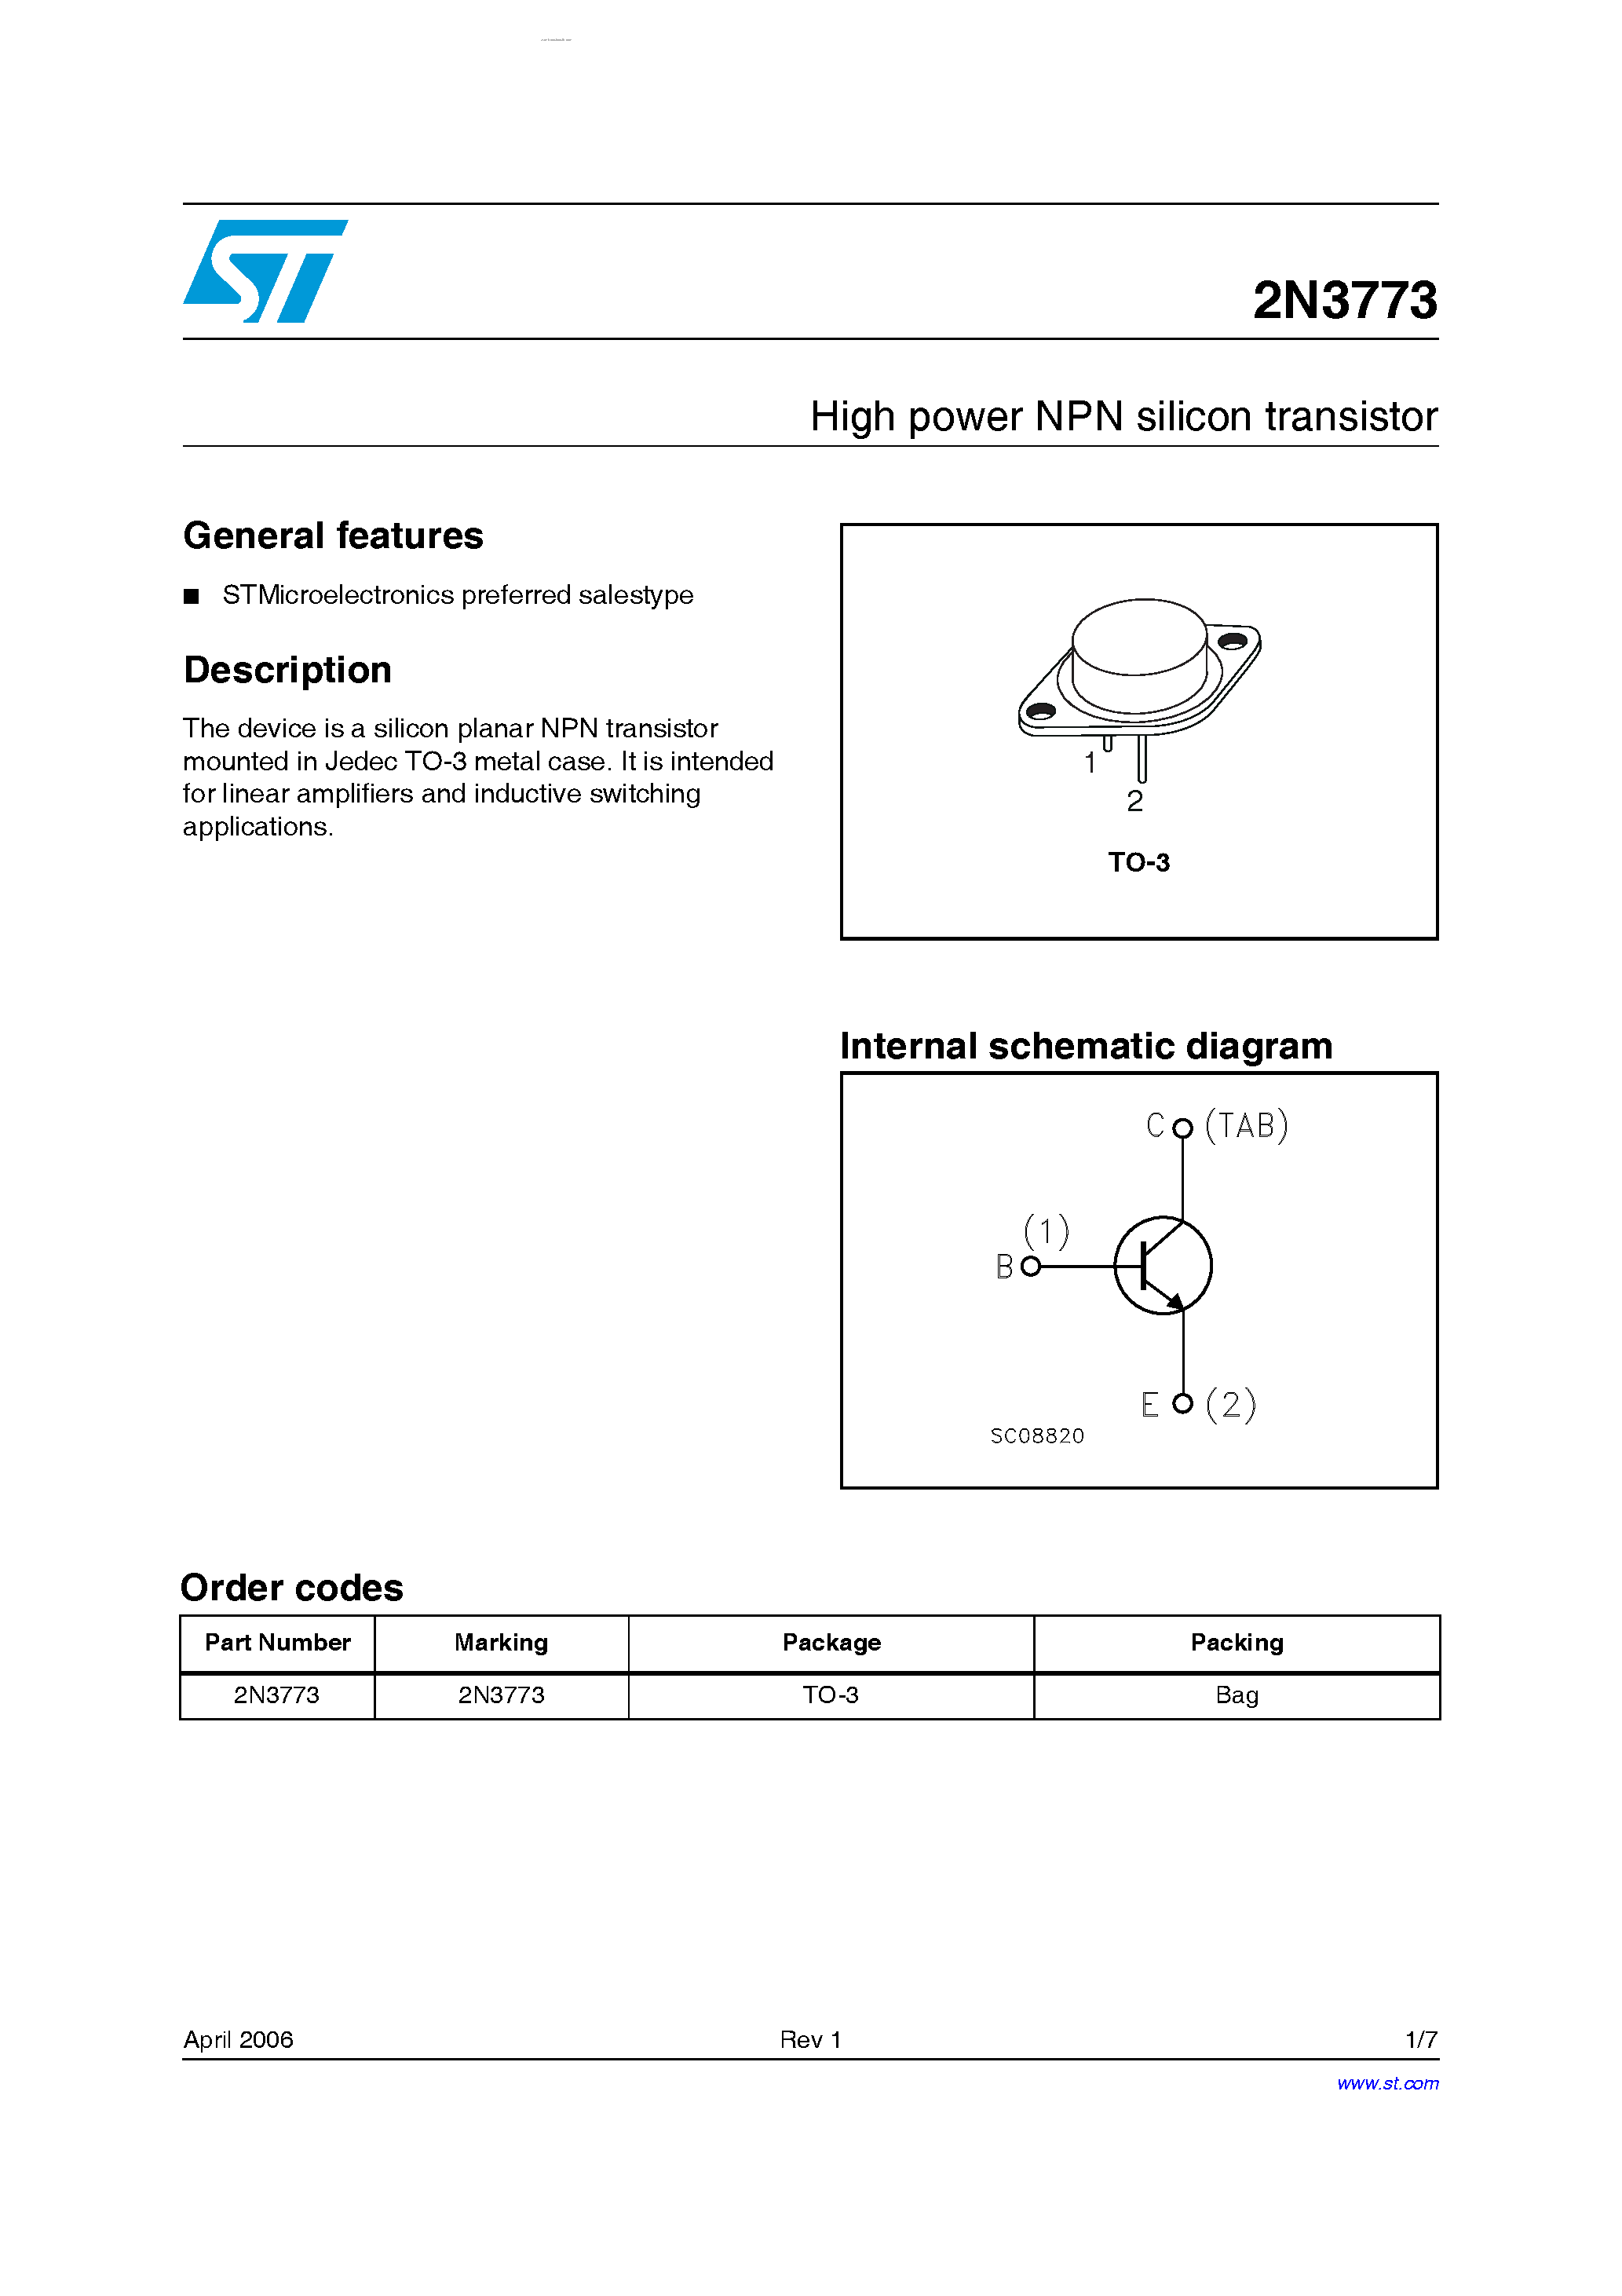 Datasheet 2N3773 - High power NPN silicon transistor page 1